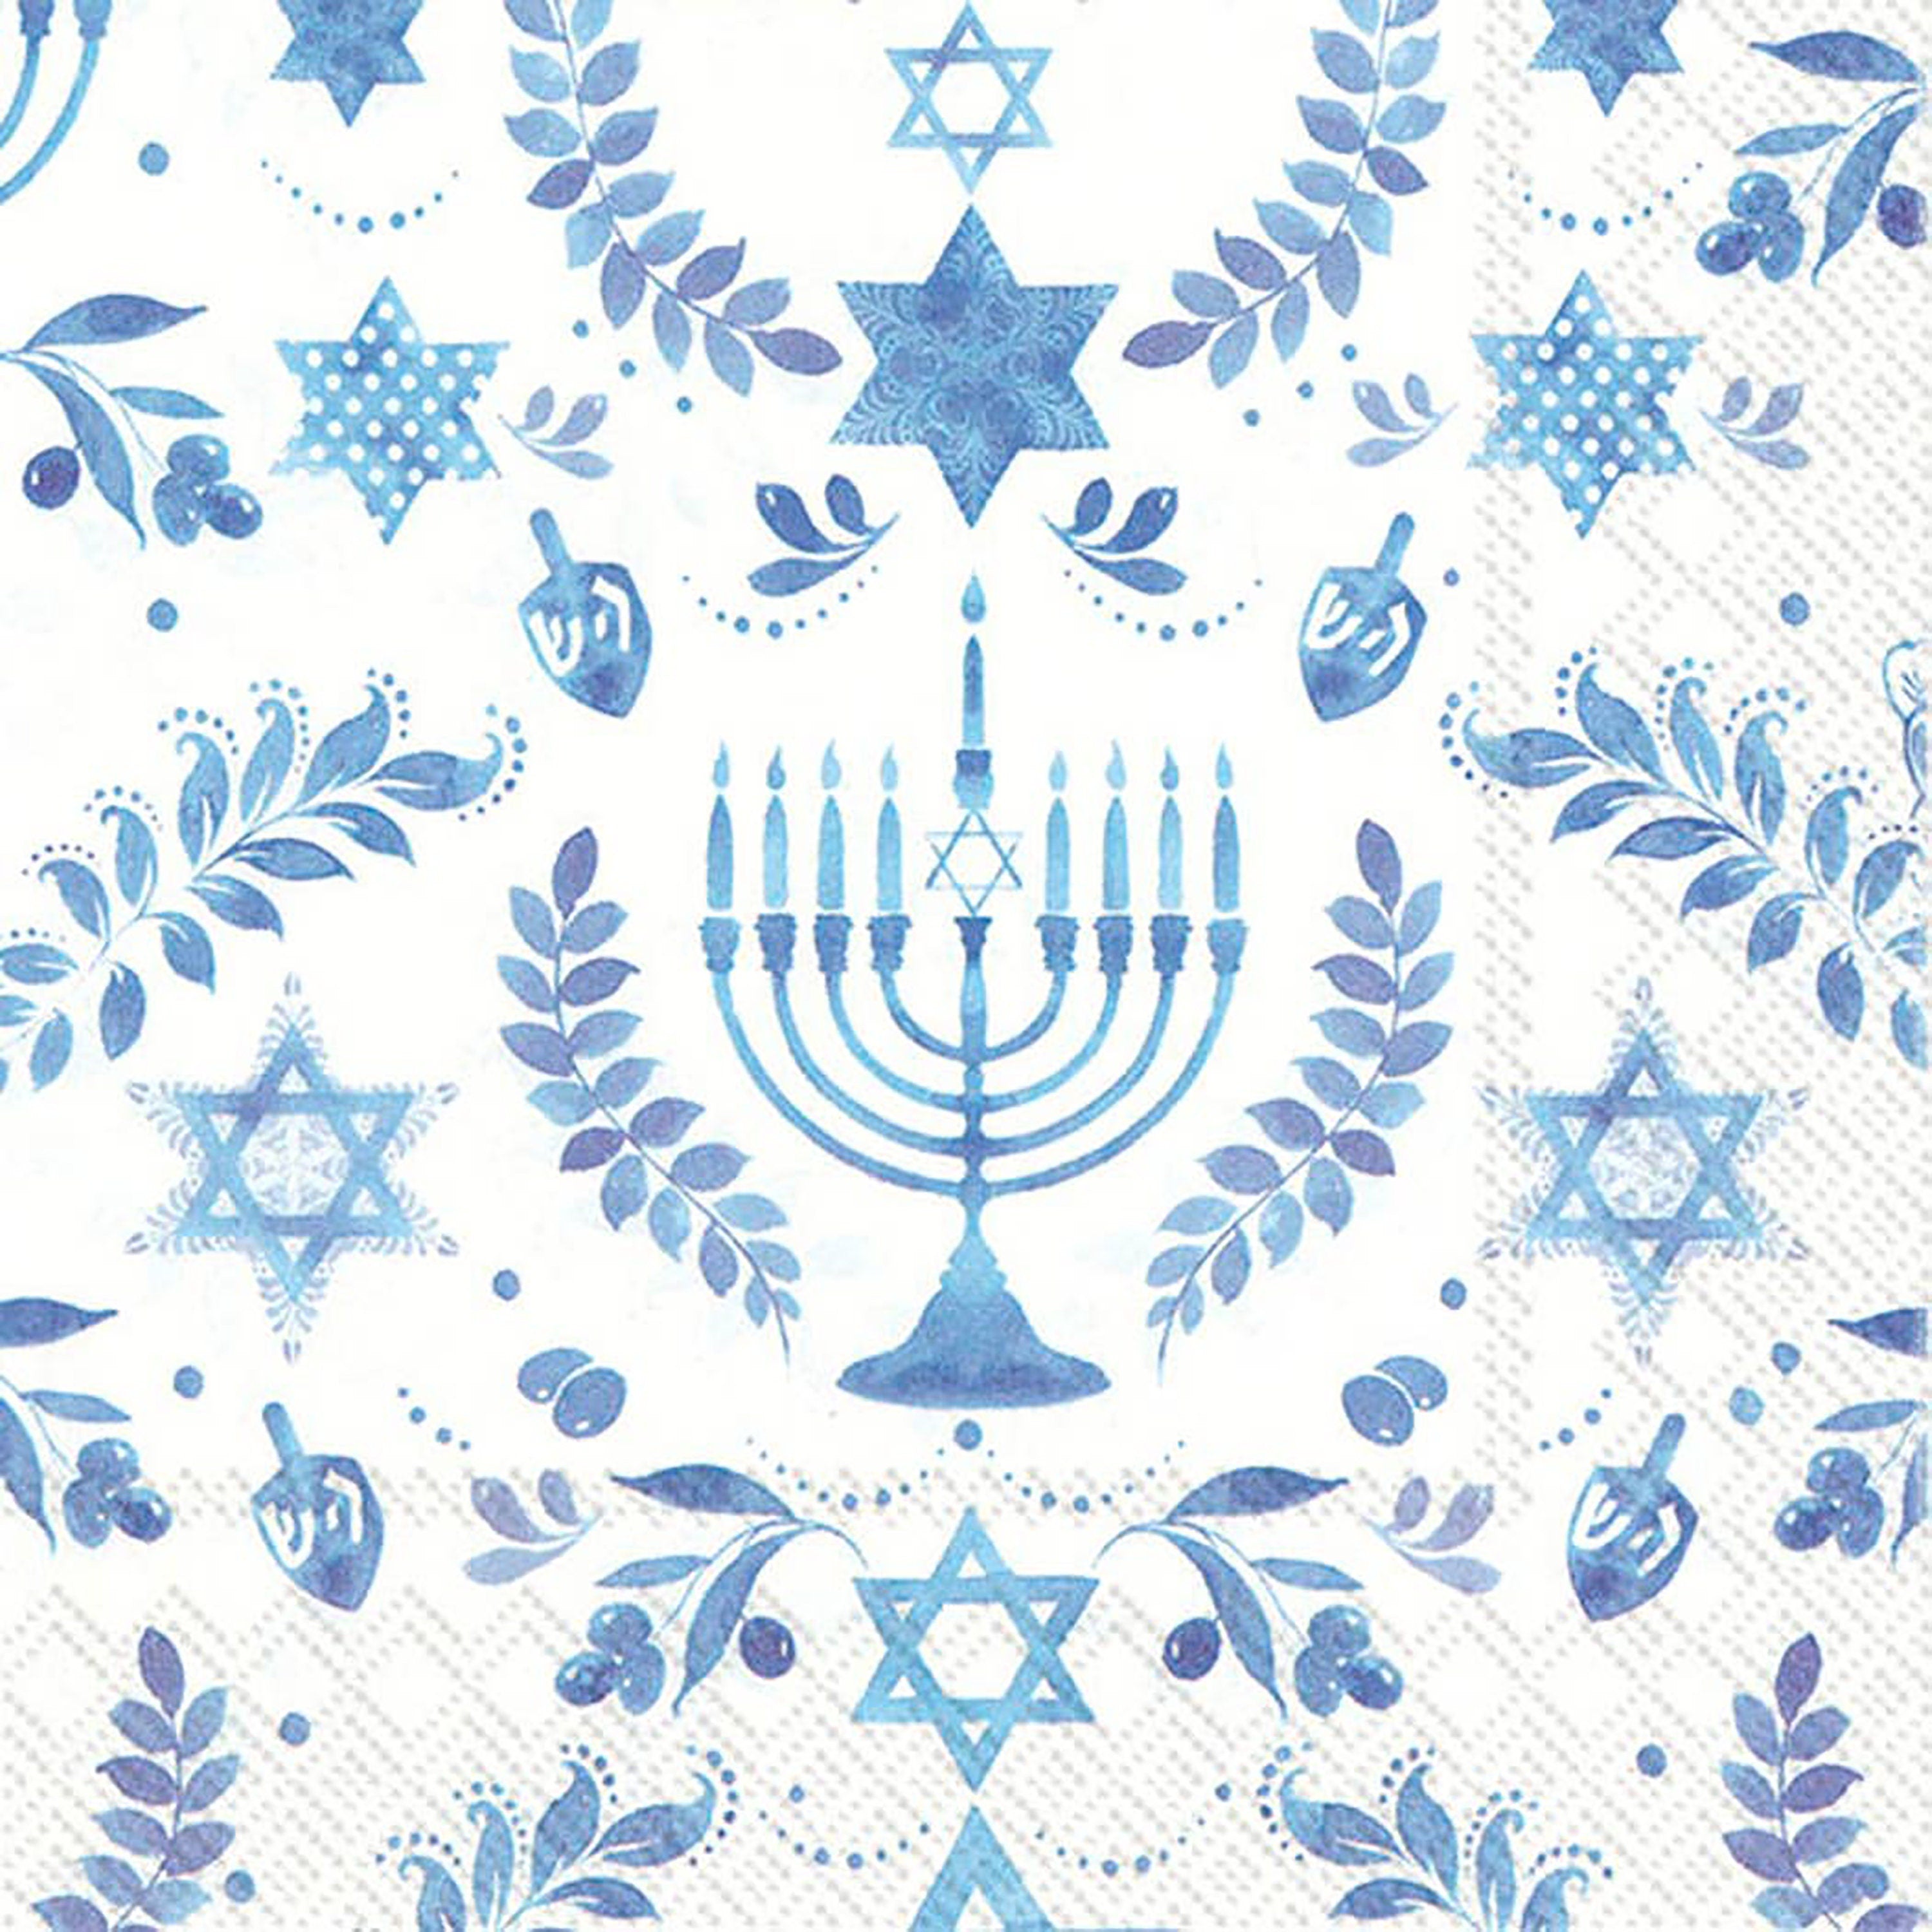 Hanukkah Napkins | Festival of Lights Hanukkah - Hanukkah Festival - Hanukkah Party - Hanukkah Celebration - Menorah, Star of David, Dreidel